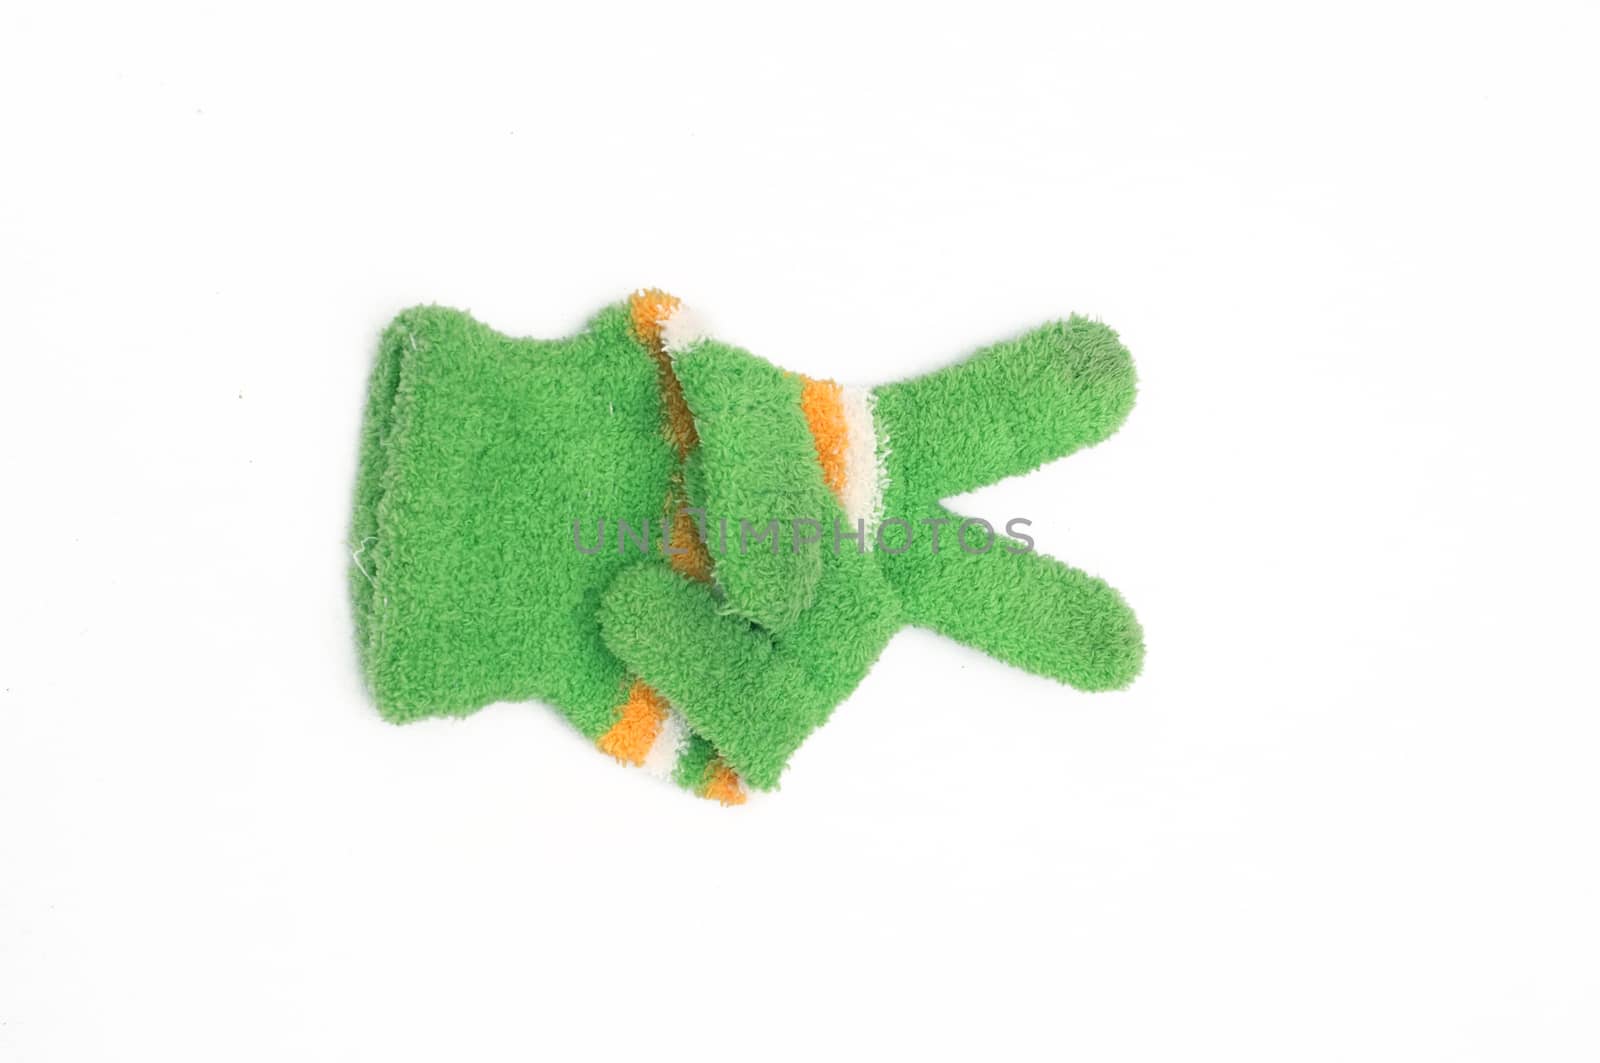 Knitted woolen gloves, winter gloves victory symbol